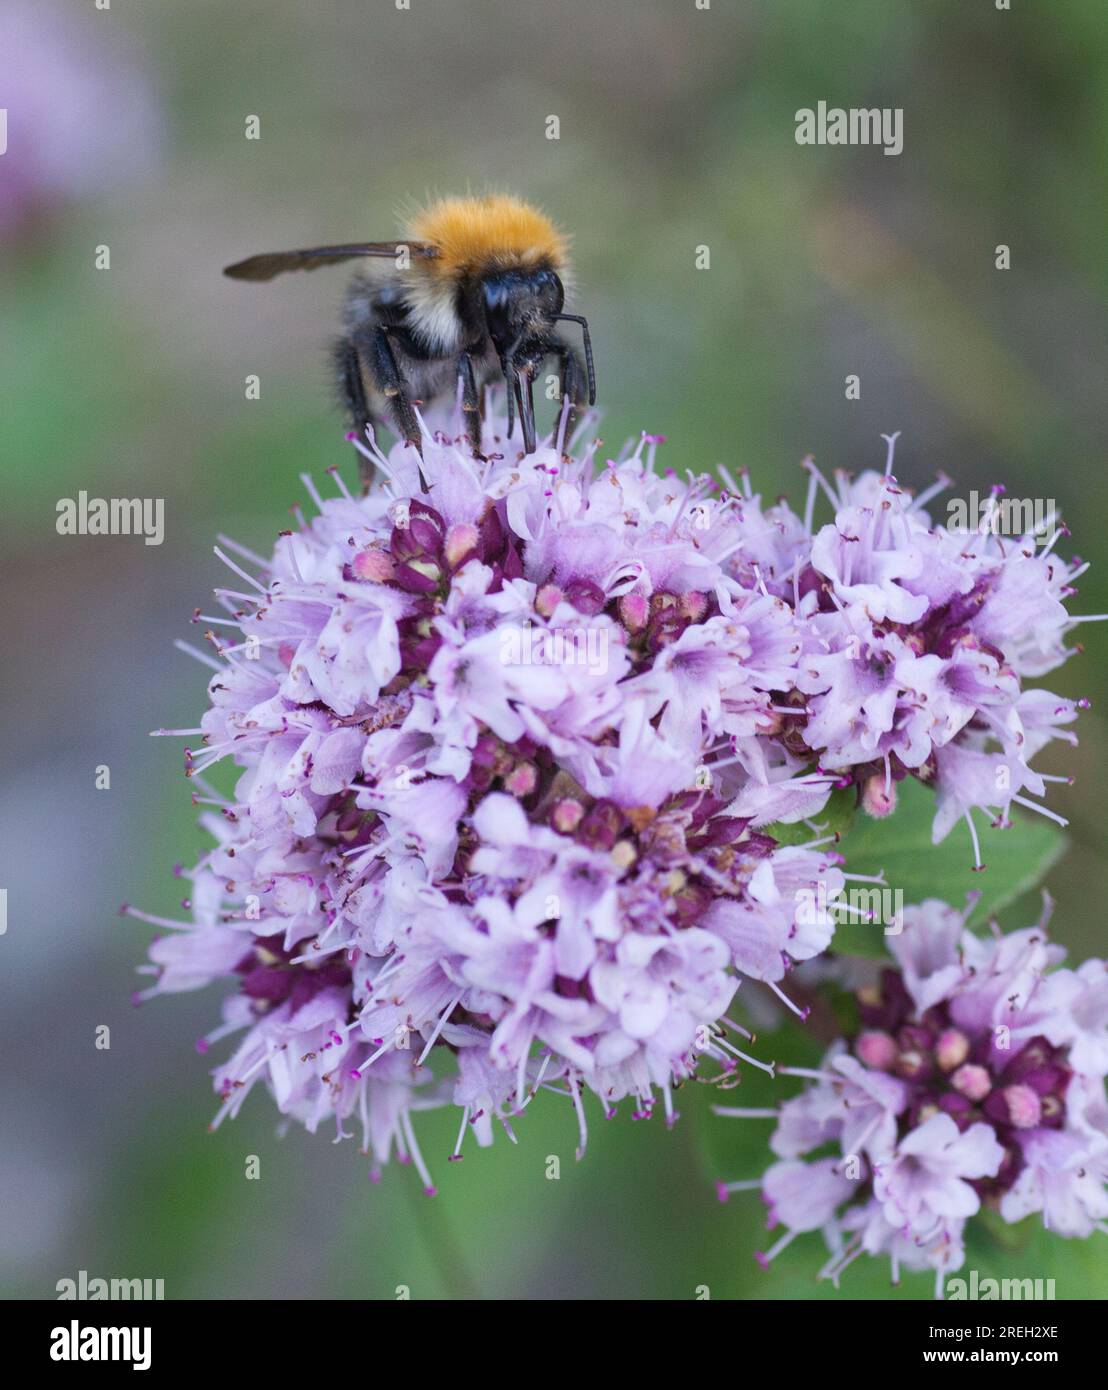 BUMBLEBEE on Oregano flower i garden Stock Photo